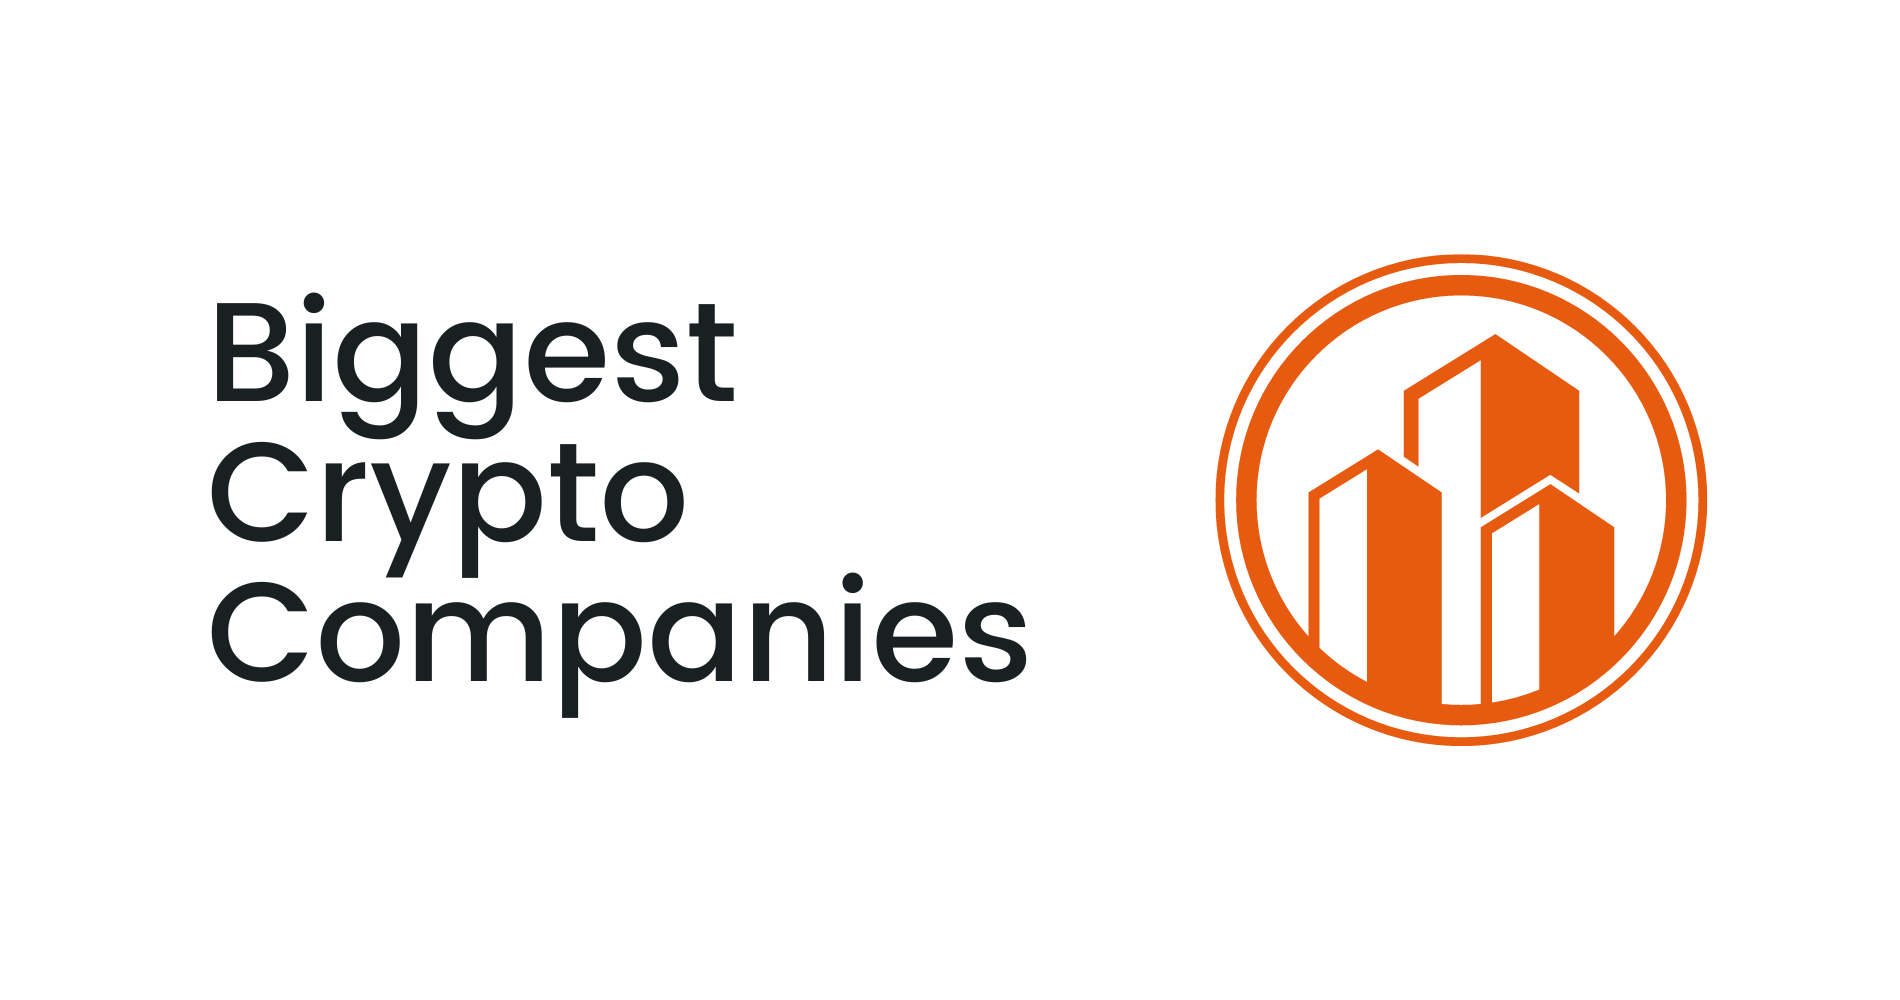 Biggest Crypto Companies